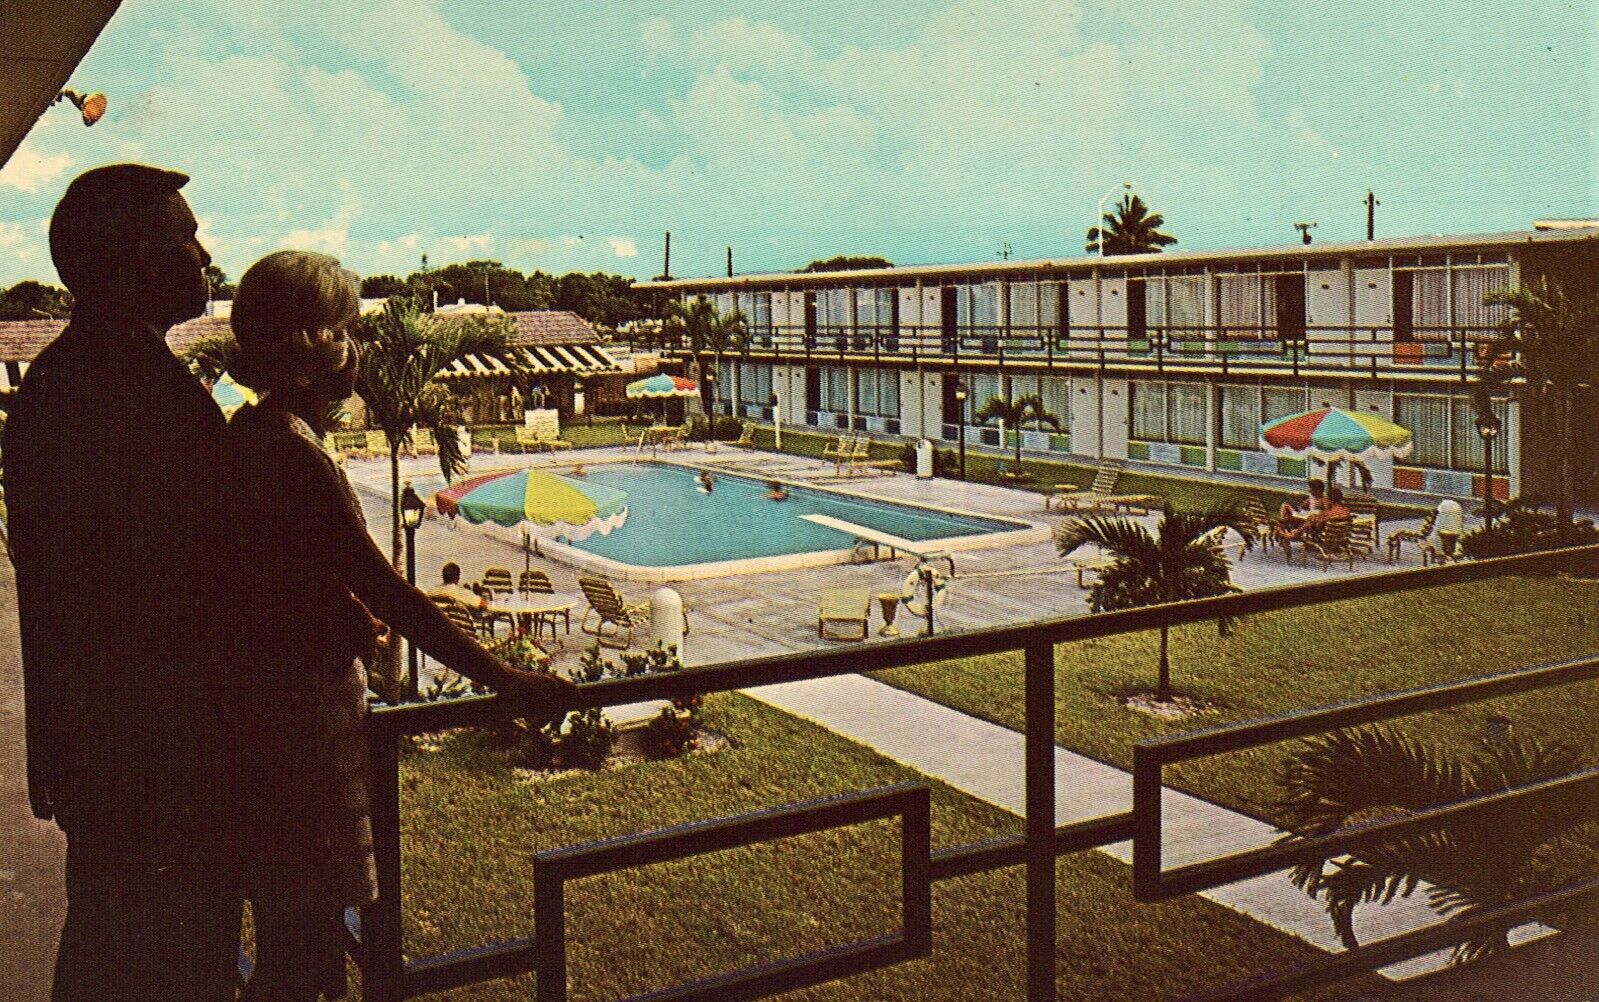 Holiday Inn - Fort Lauderdale, Florida Vintage Postcard